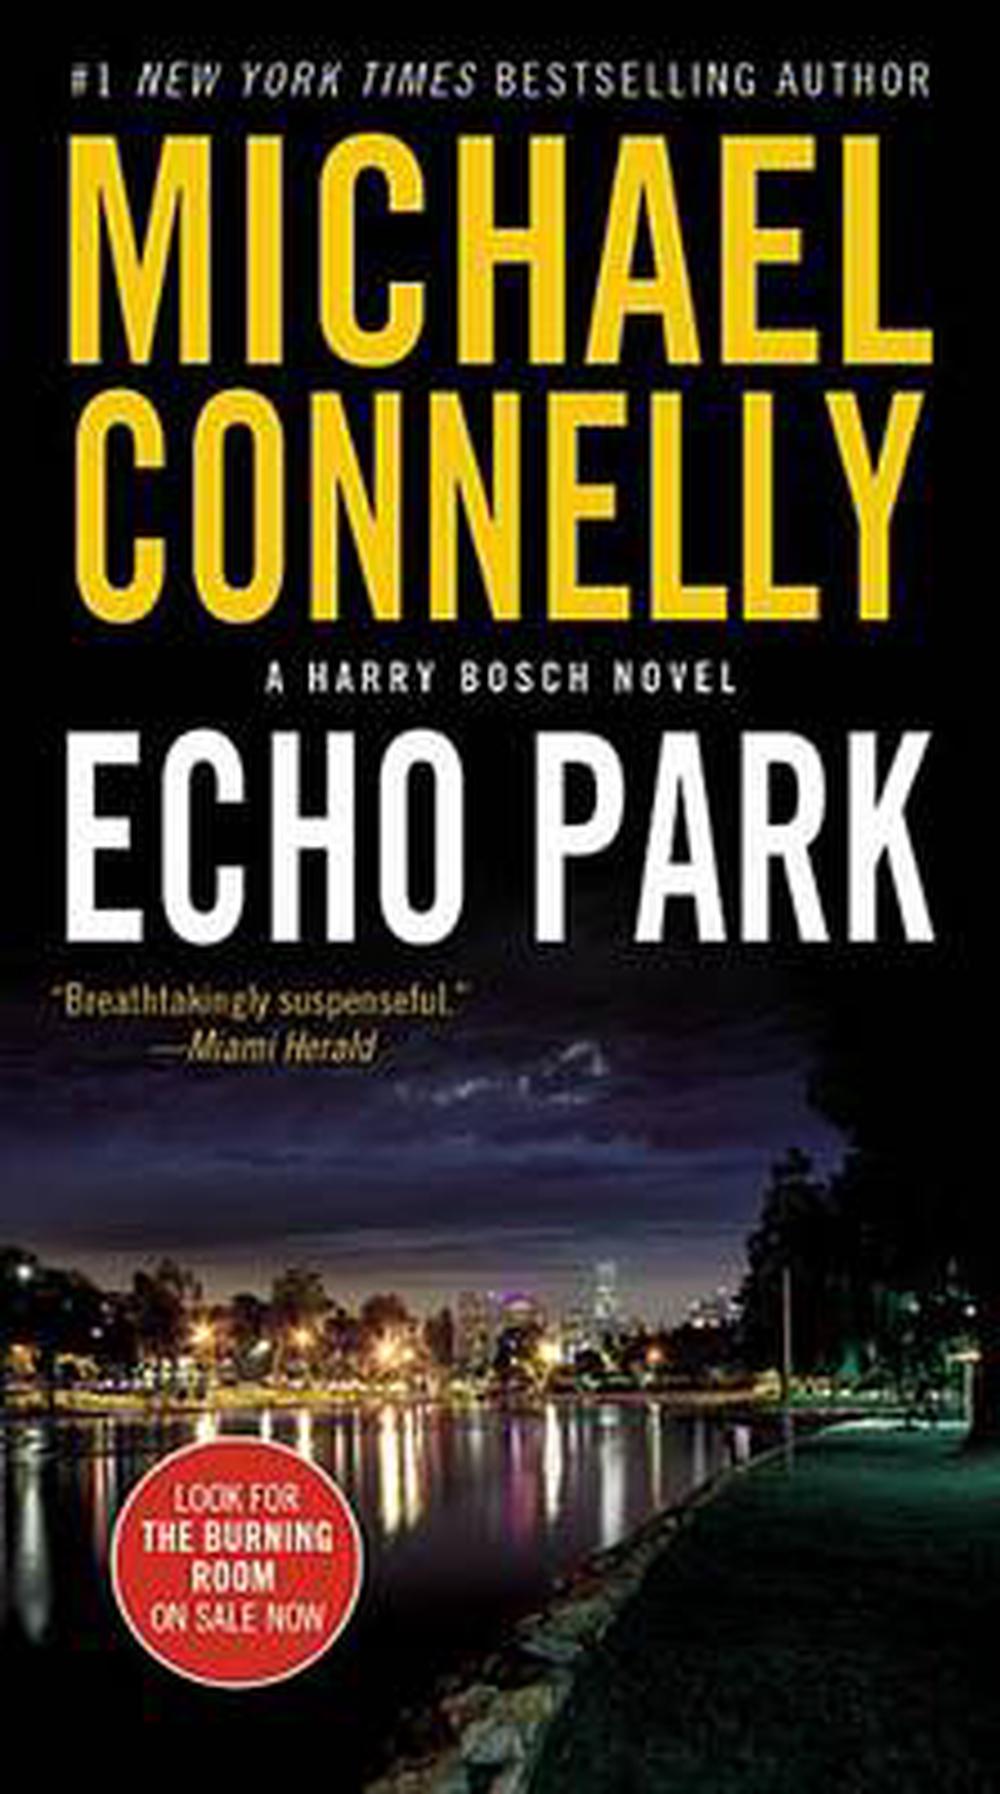 A Harry Bosch Novel: Echo Park (Series #12) (Paperback) - image 1 of 1